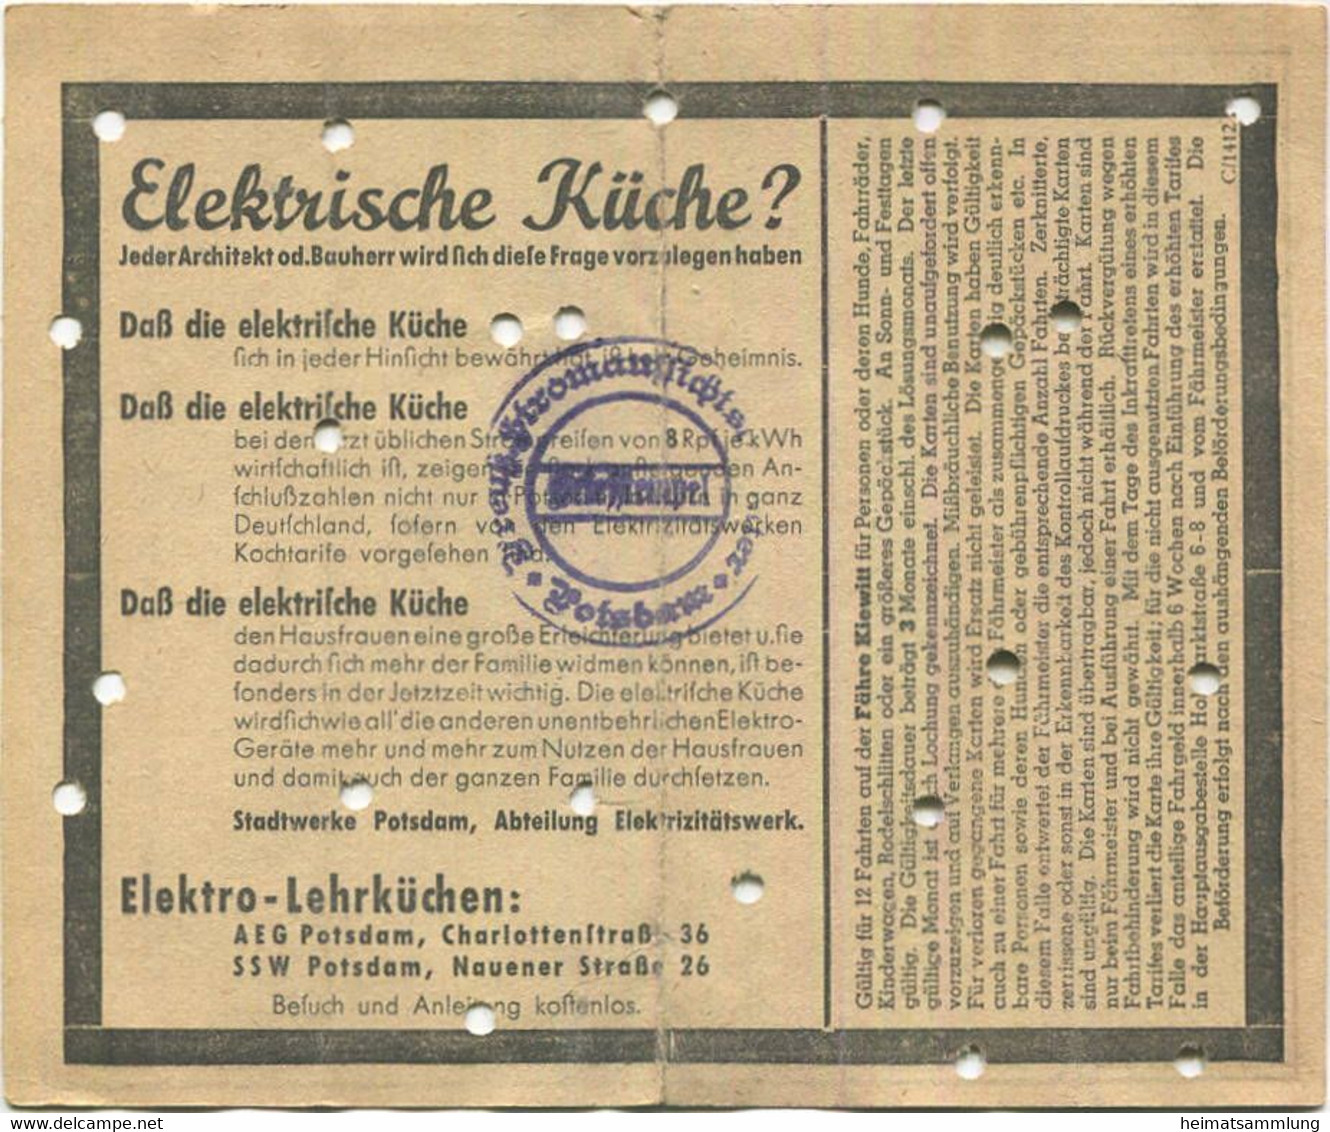 Deutschland - Stadtwerke Potsdam Abt. Verkehrsbetriebe -  Zwölferkarte Für Fähre Kiewitt - Preis 0.80 RM - Fahrkarte - Europe